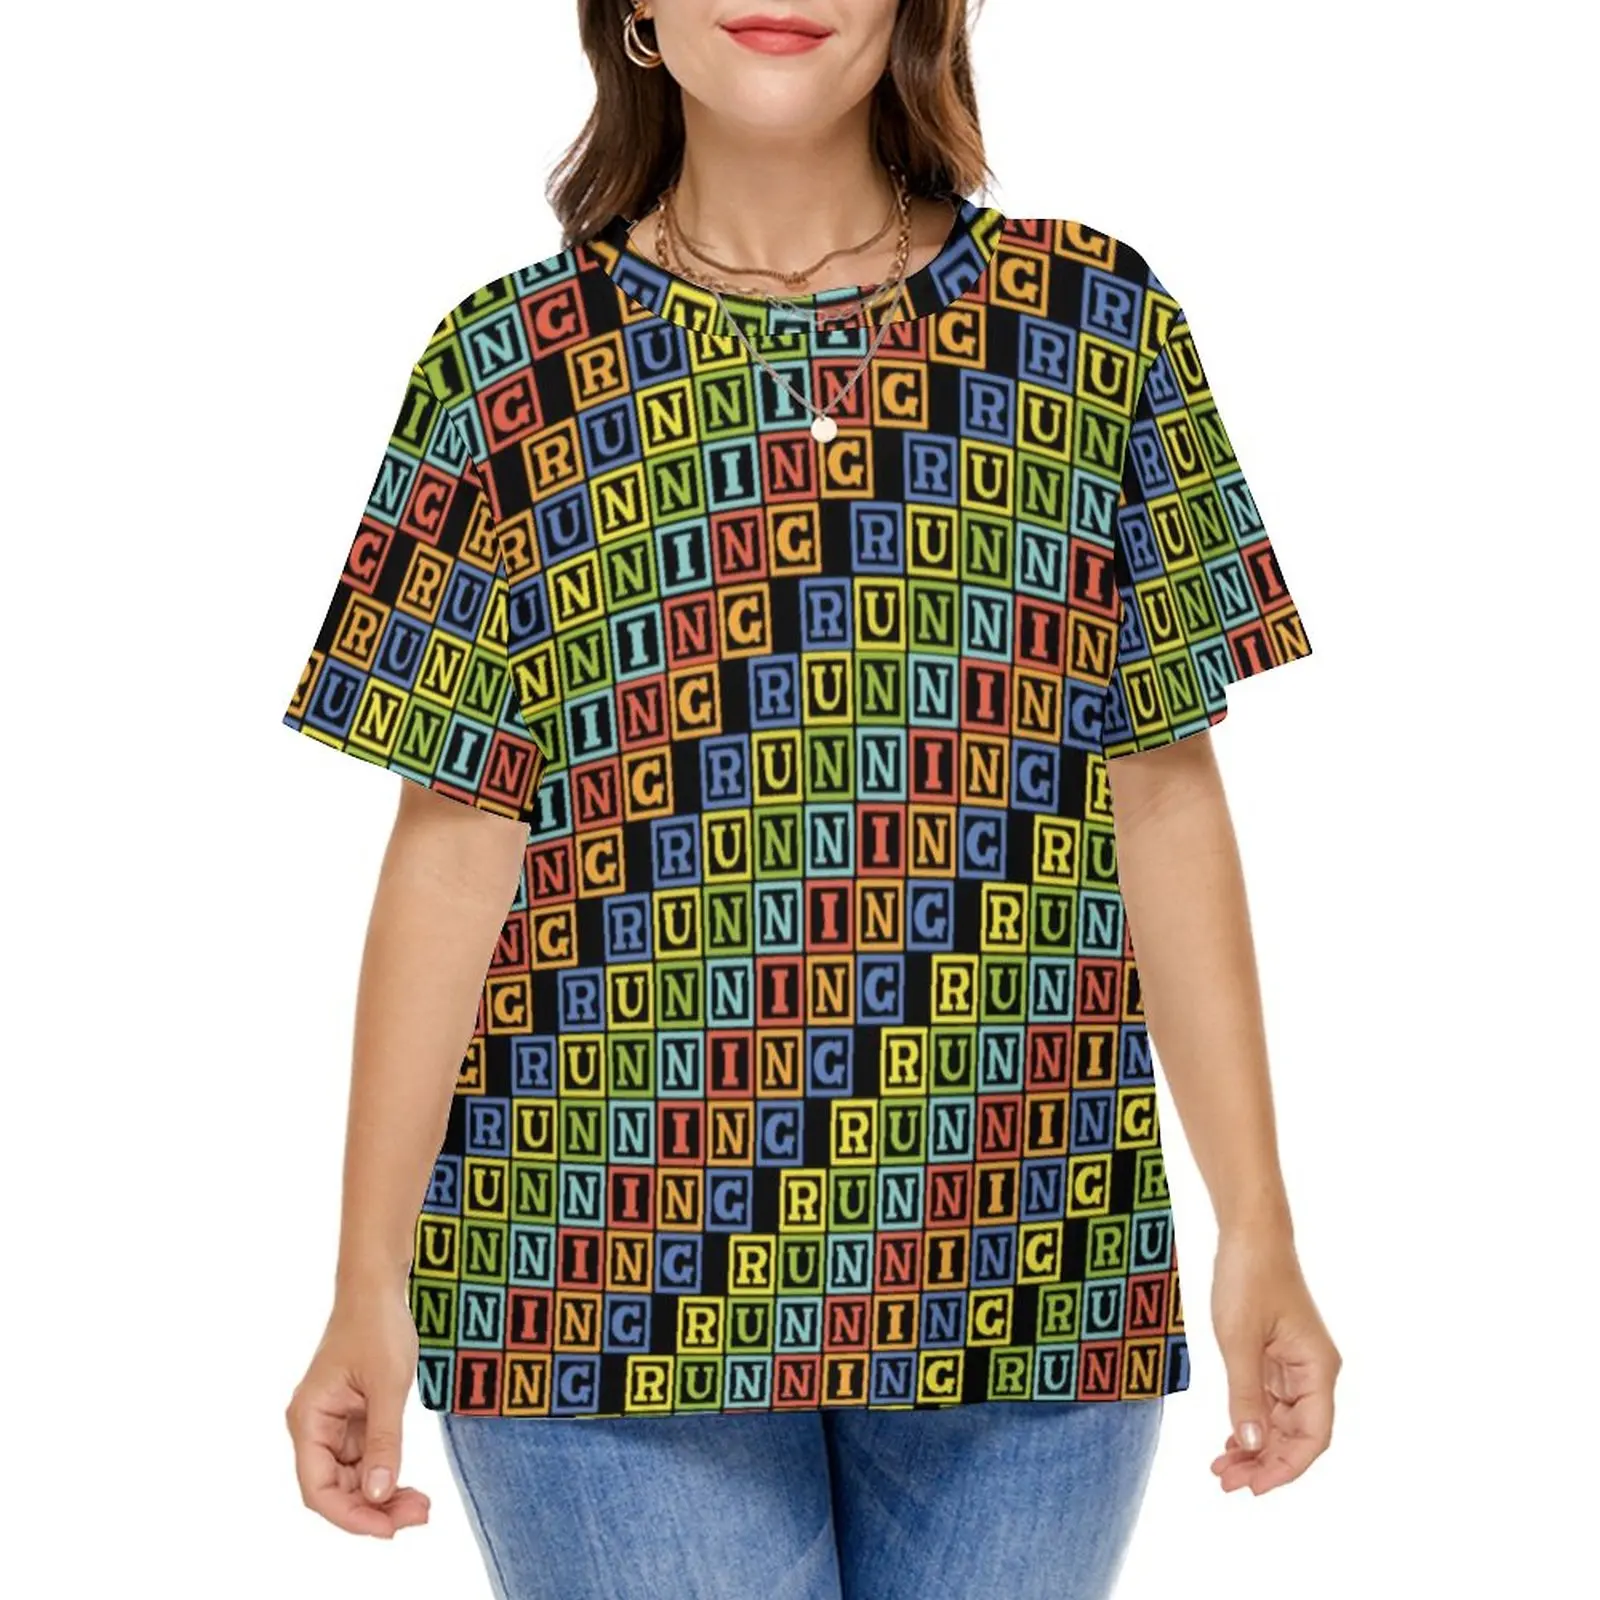 Rainbow Letter Print T-Shirt Multicolored Letters Kawaii T Shirts Short Sleeve Tops Women Streetwear Clothing Plus Size 5XL 6XL